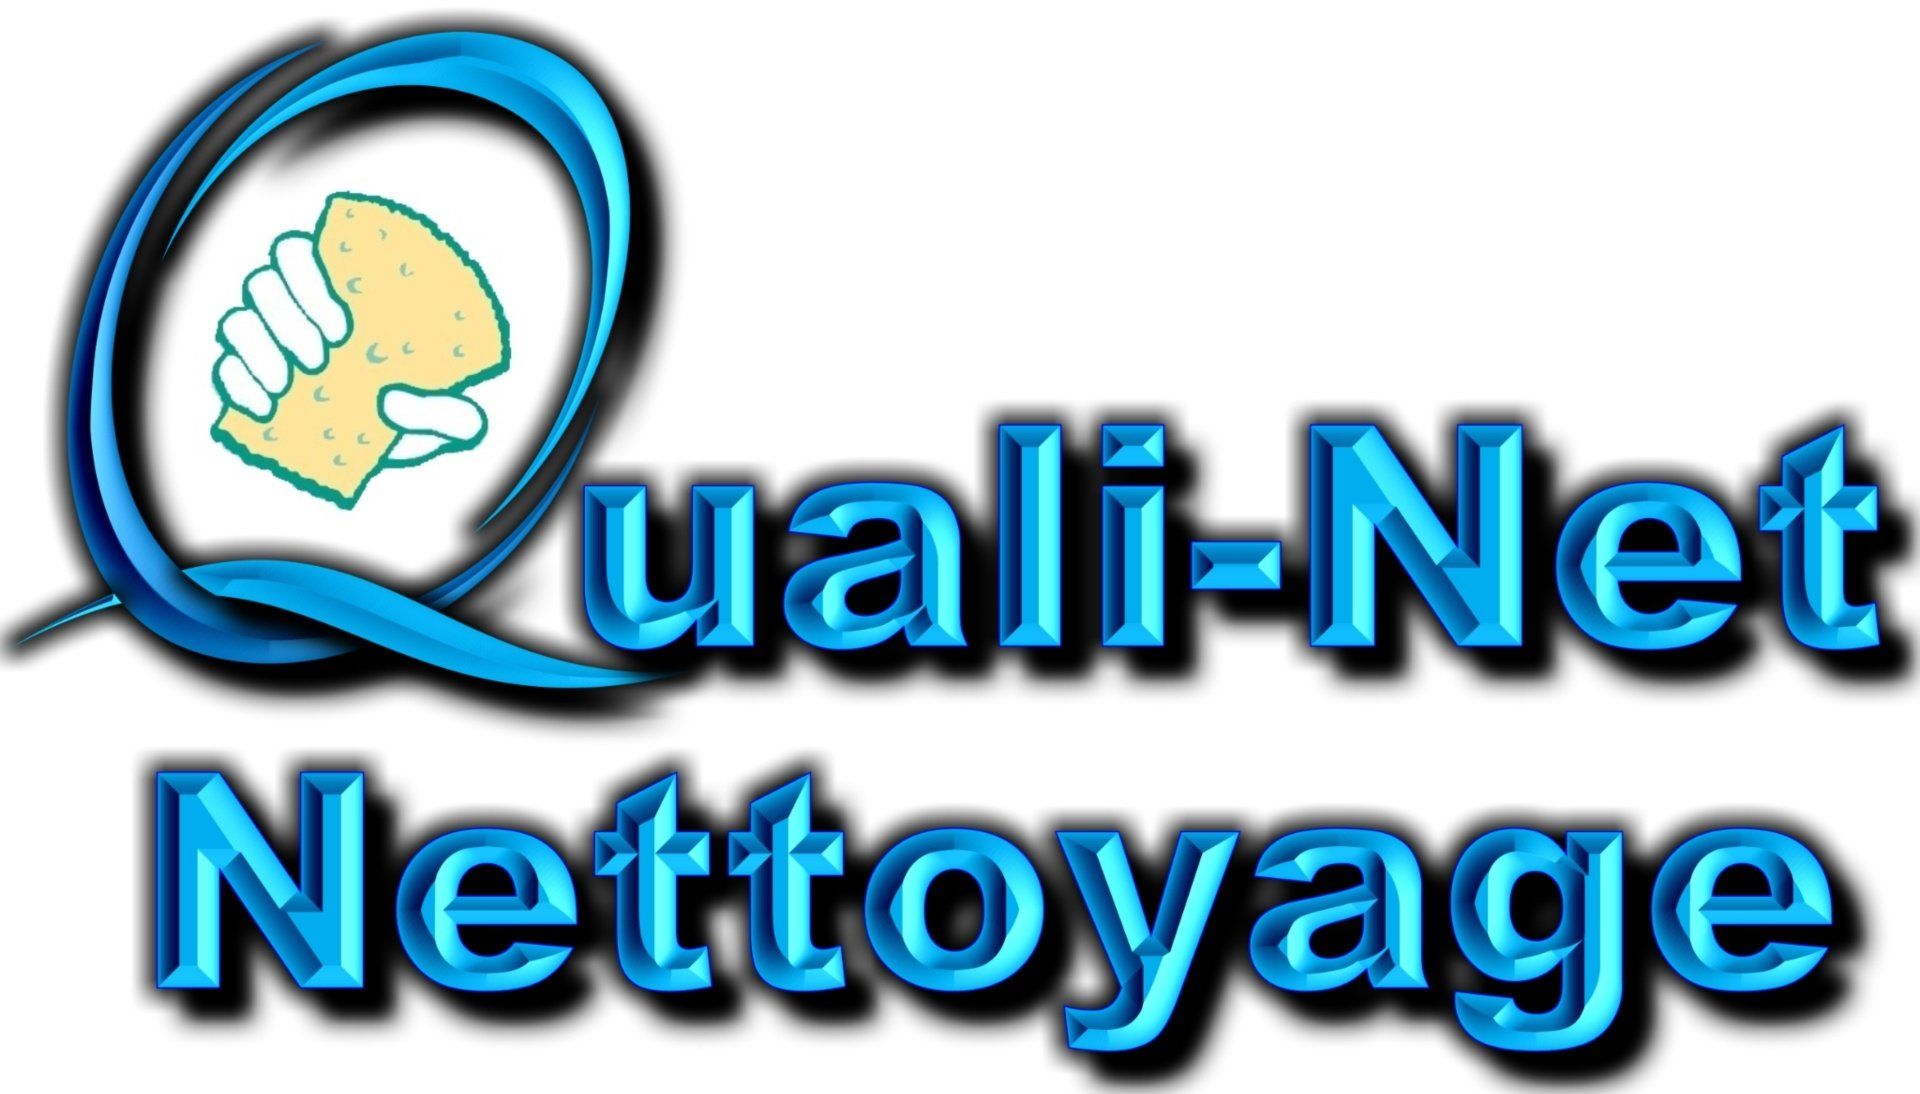 Quali-Net Nettoyage